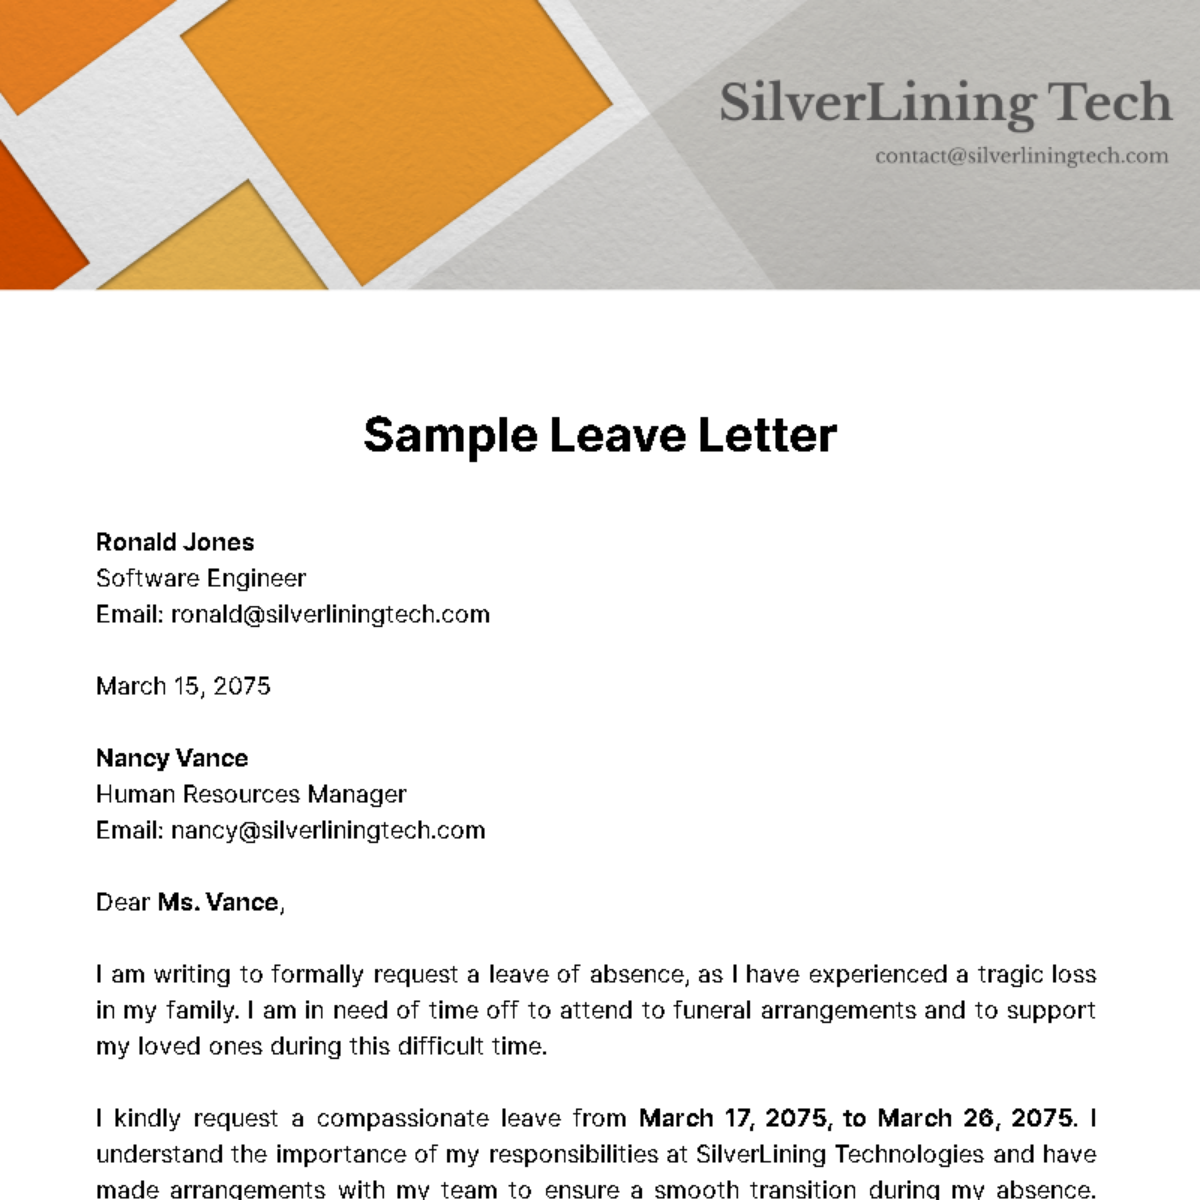 Sample Leave Letter Template